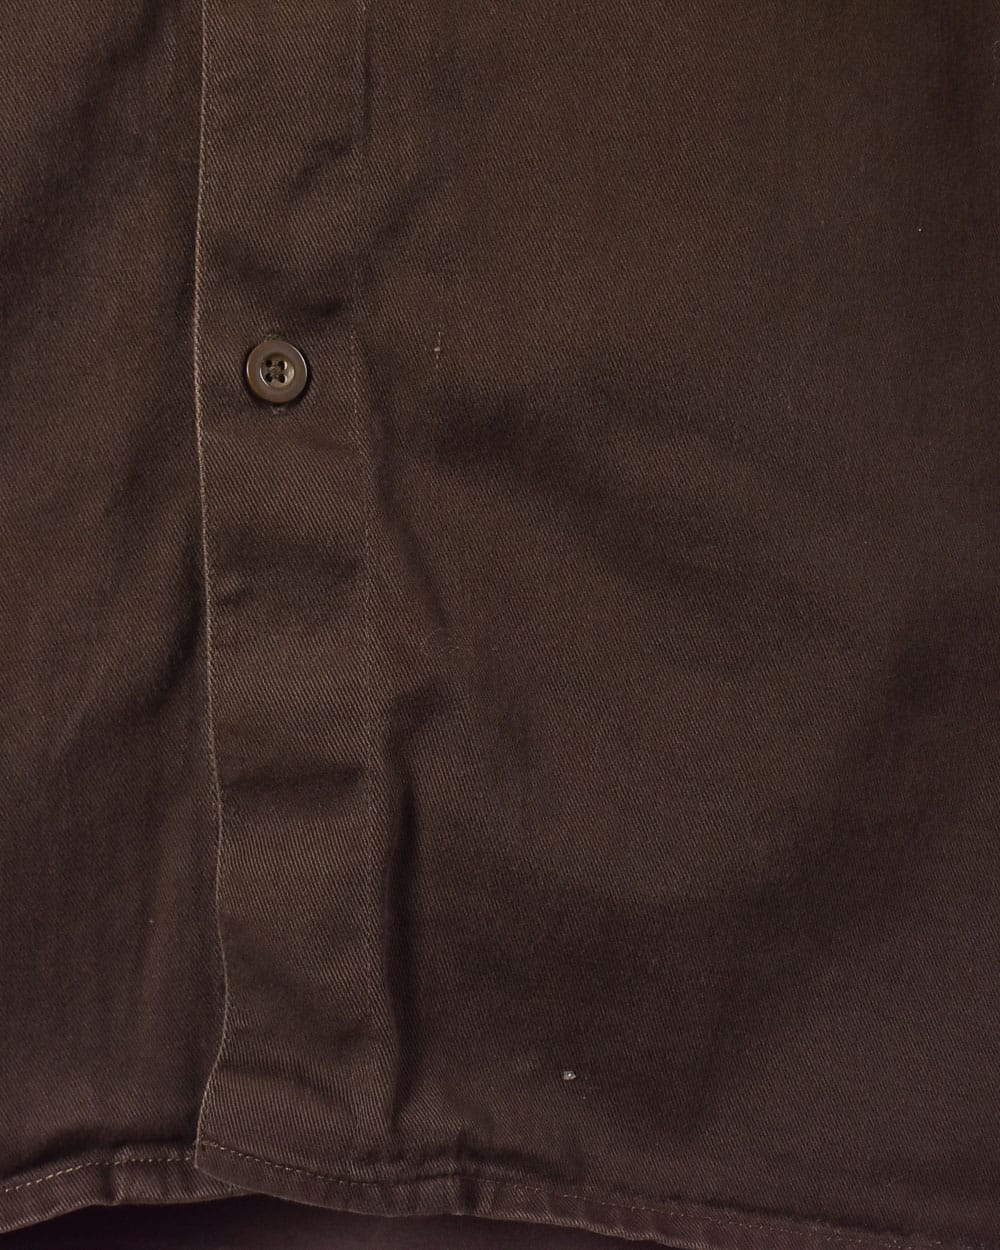 Brown Dickies Workwear Short Sleeved Shirt - XX-Large